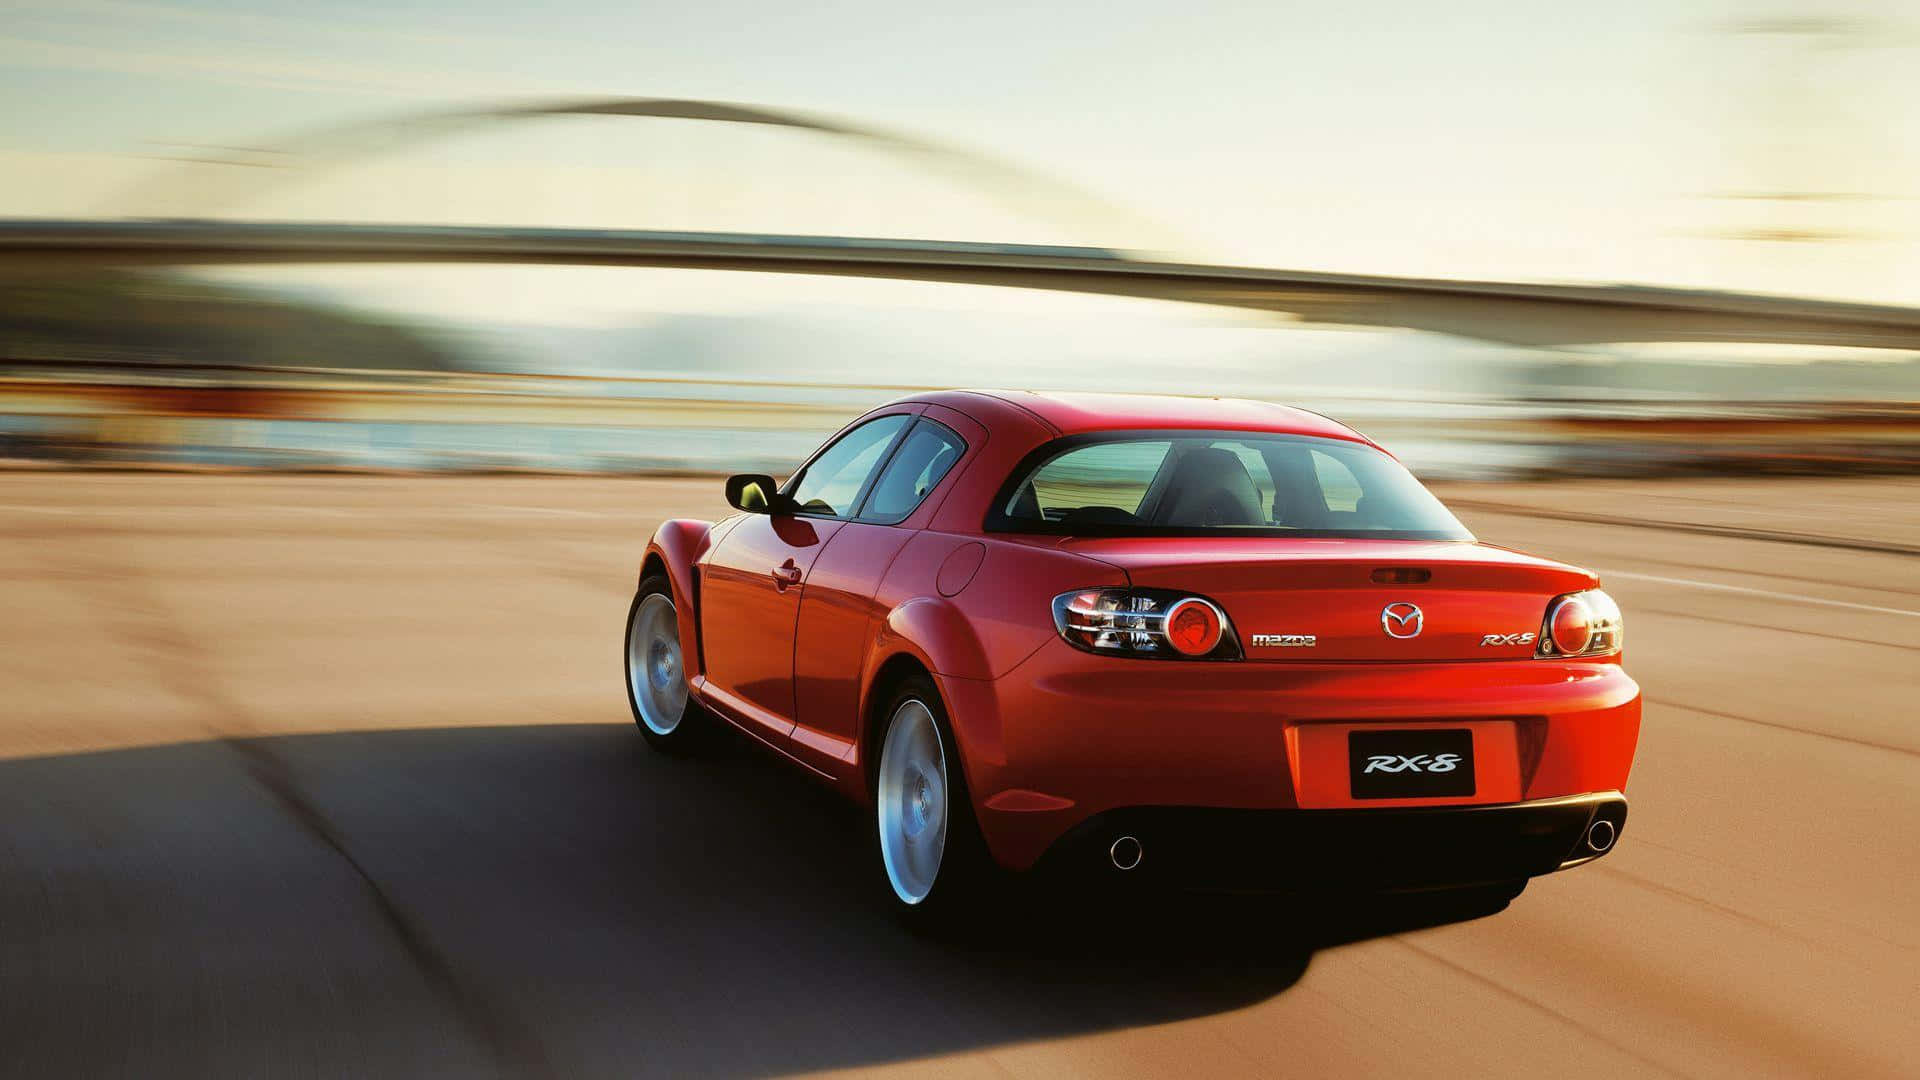 Sleek Mazda RX-8 Sports Car Wallpaper